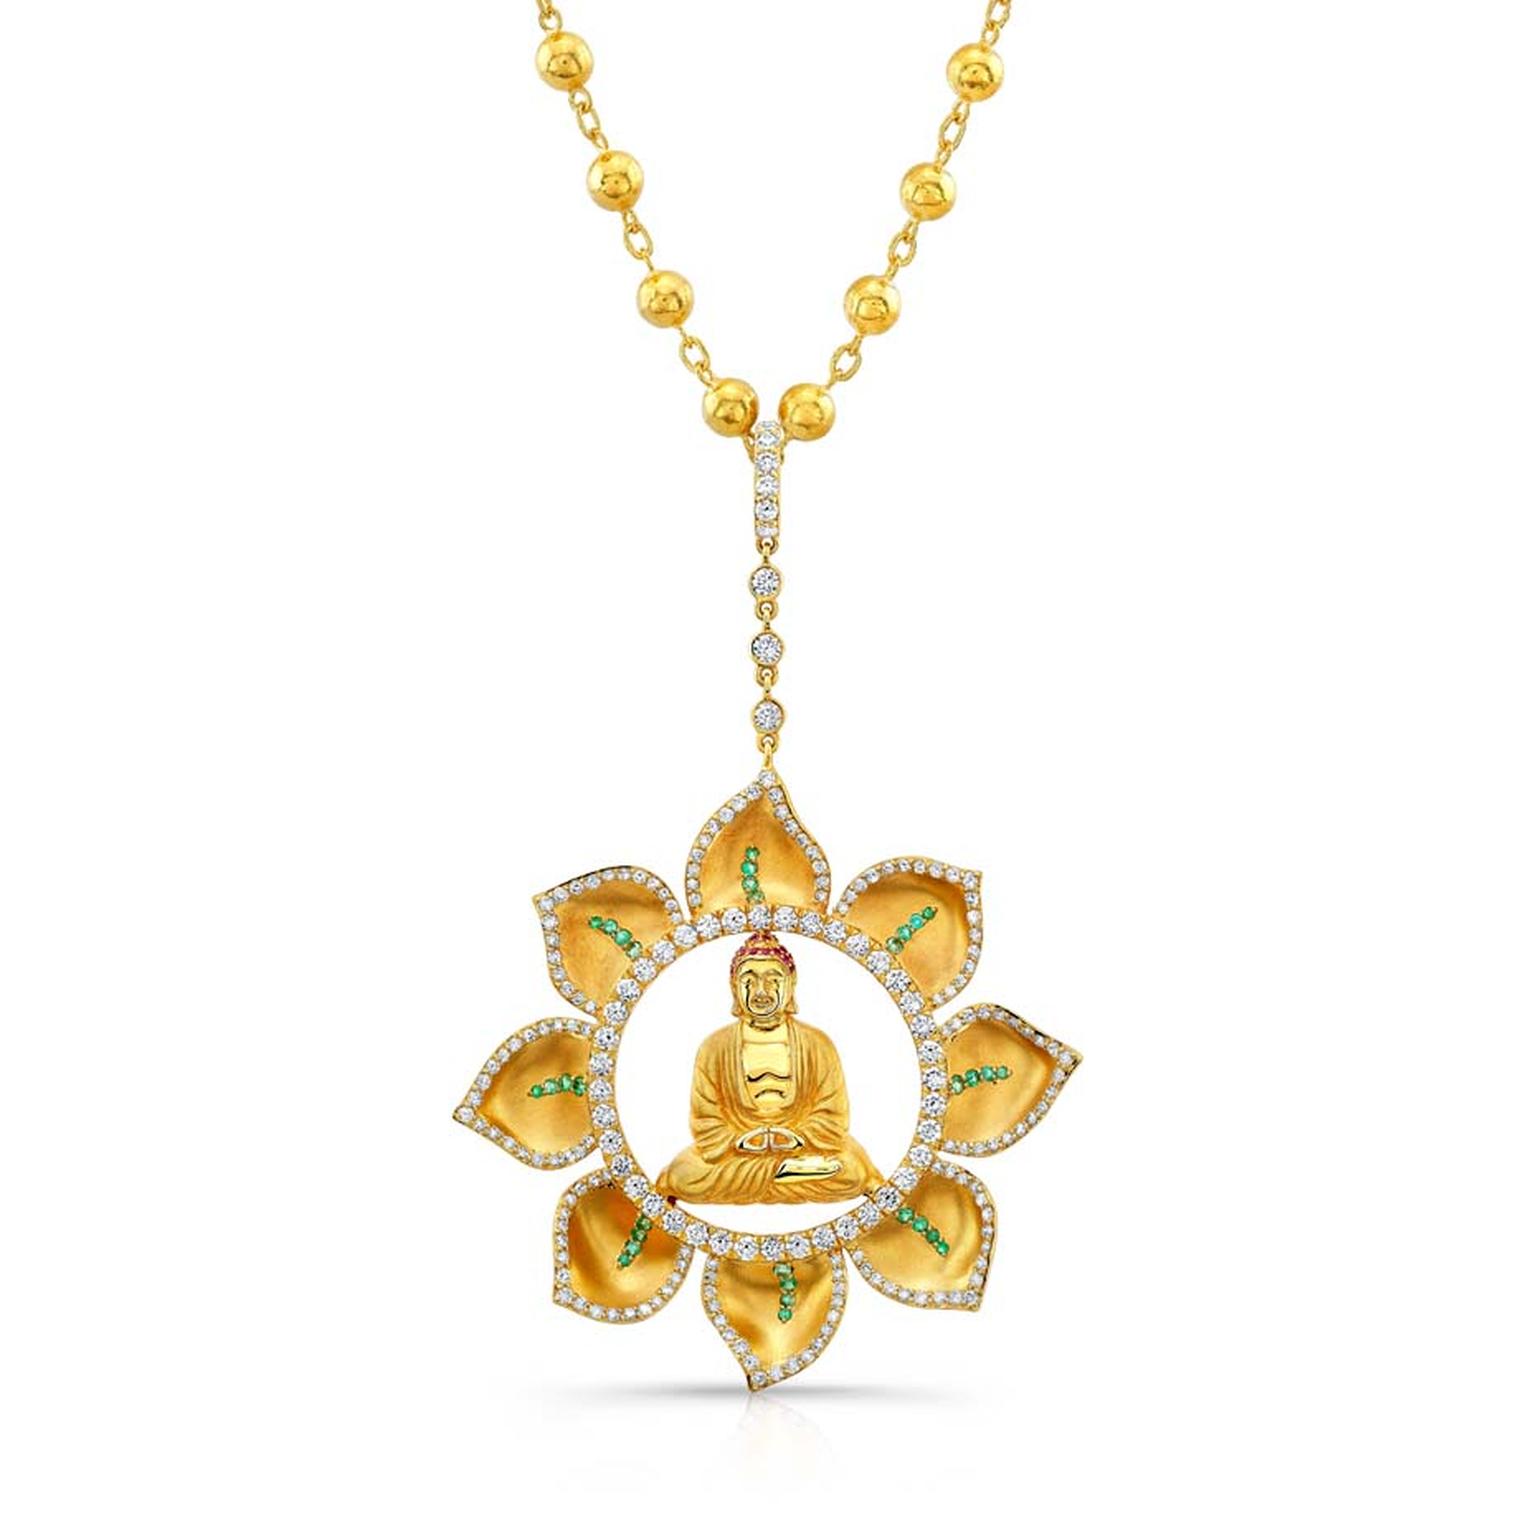 Buddha Mama emerald and diamond pendant set in gold ($28,000).